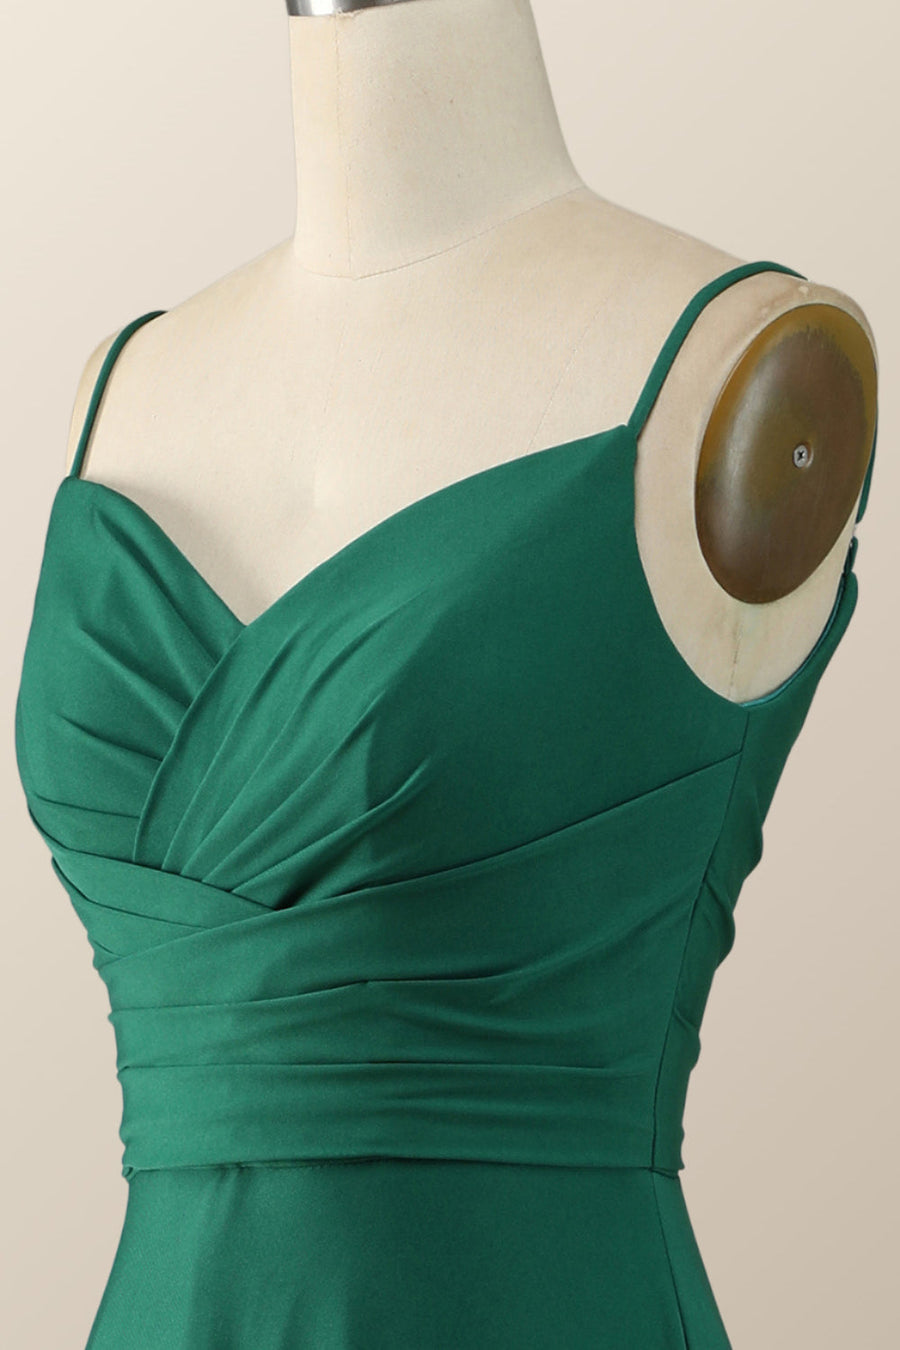 Simply Green Pleated Satin Long Bridesmaid Dress